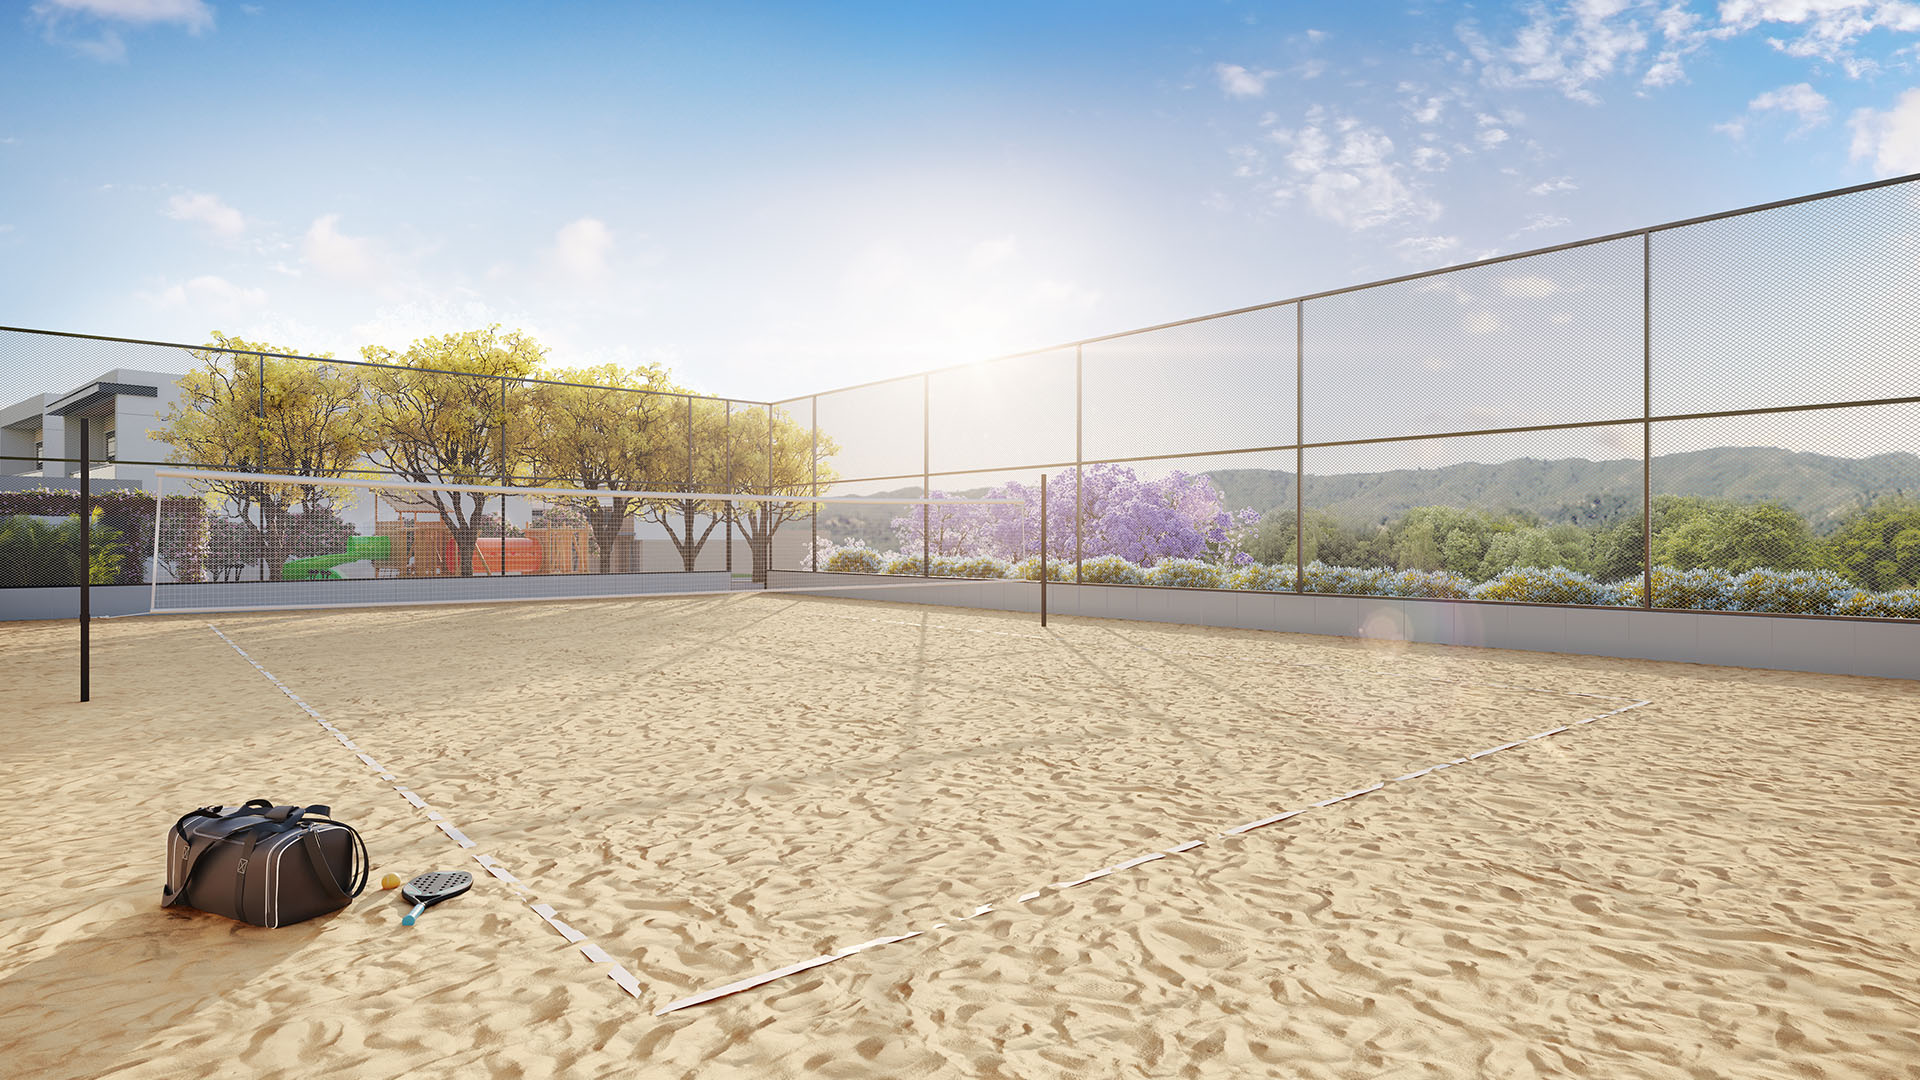 Perspectiva ilustrada da Quadra esportiva de areia